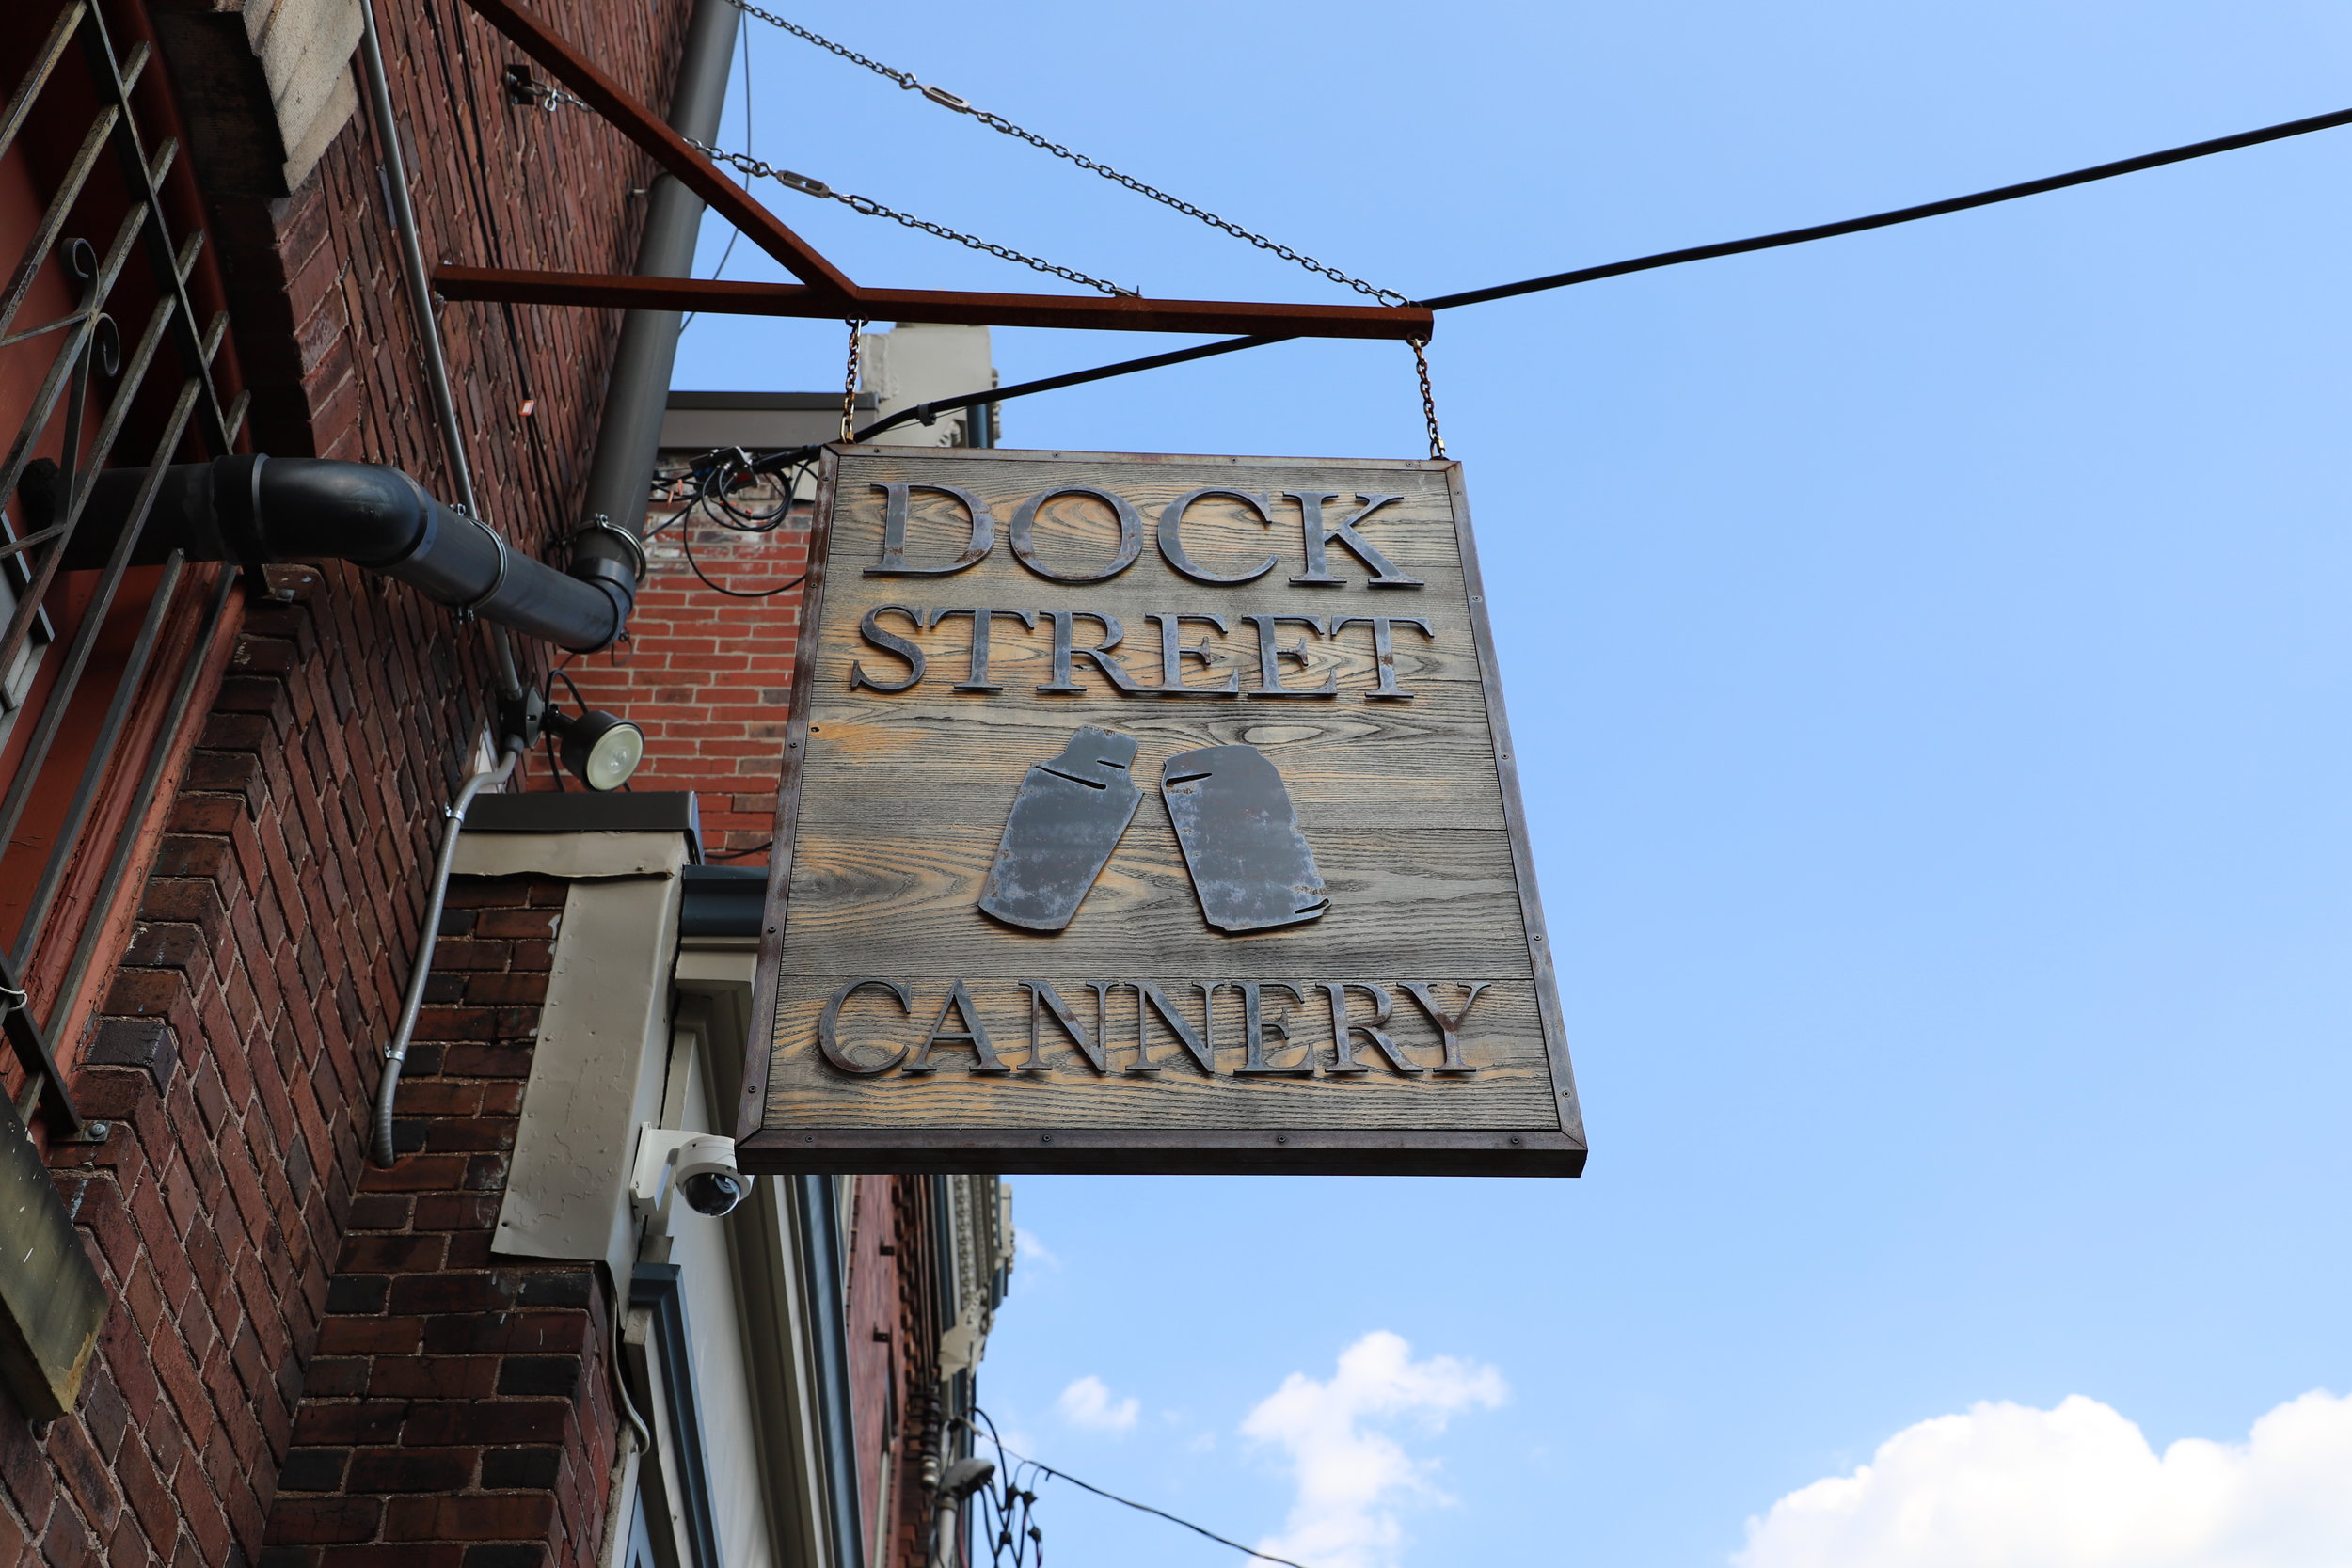 Dock Street Cannery.JPG